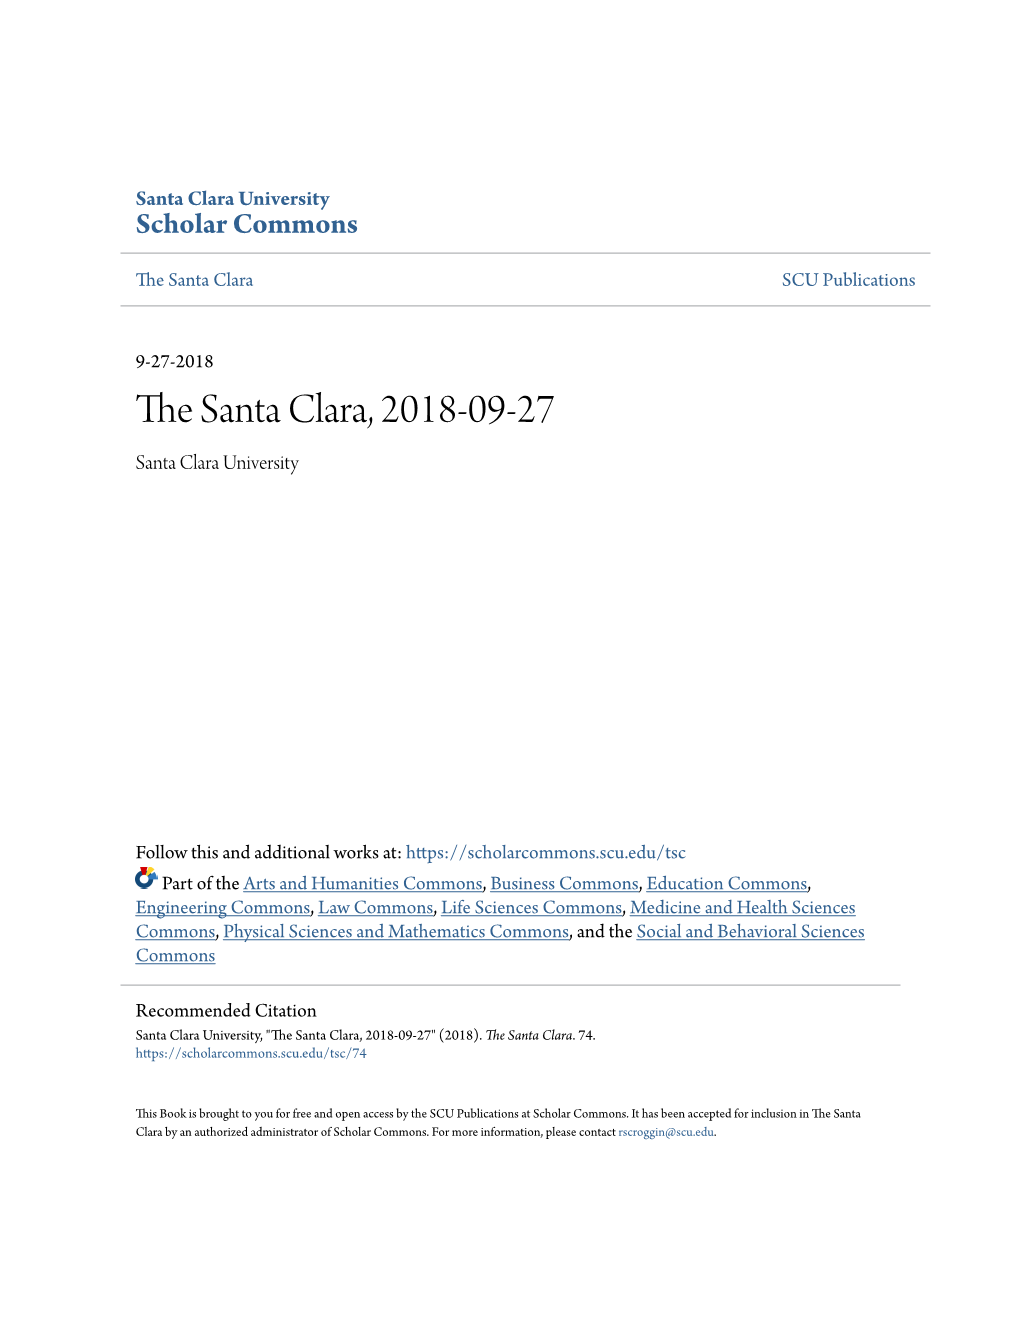 The Santa Clara, 2018-09-27